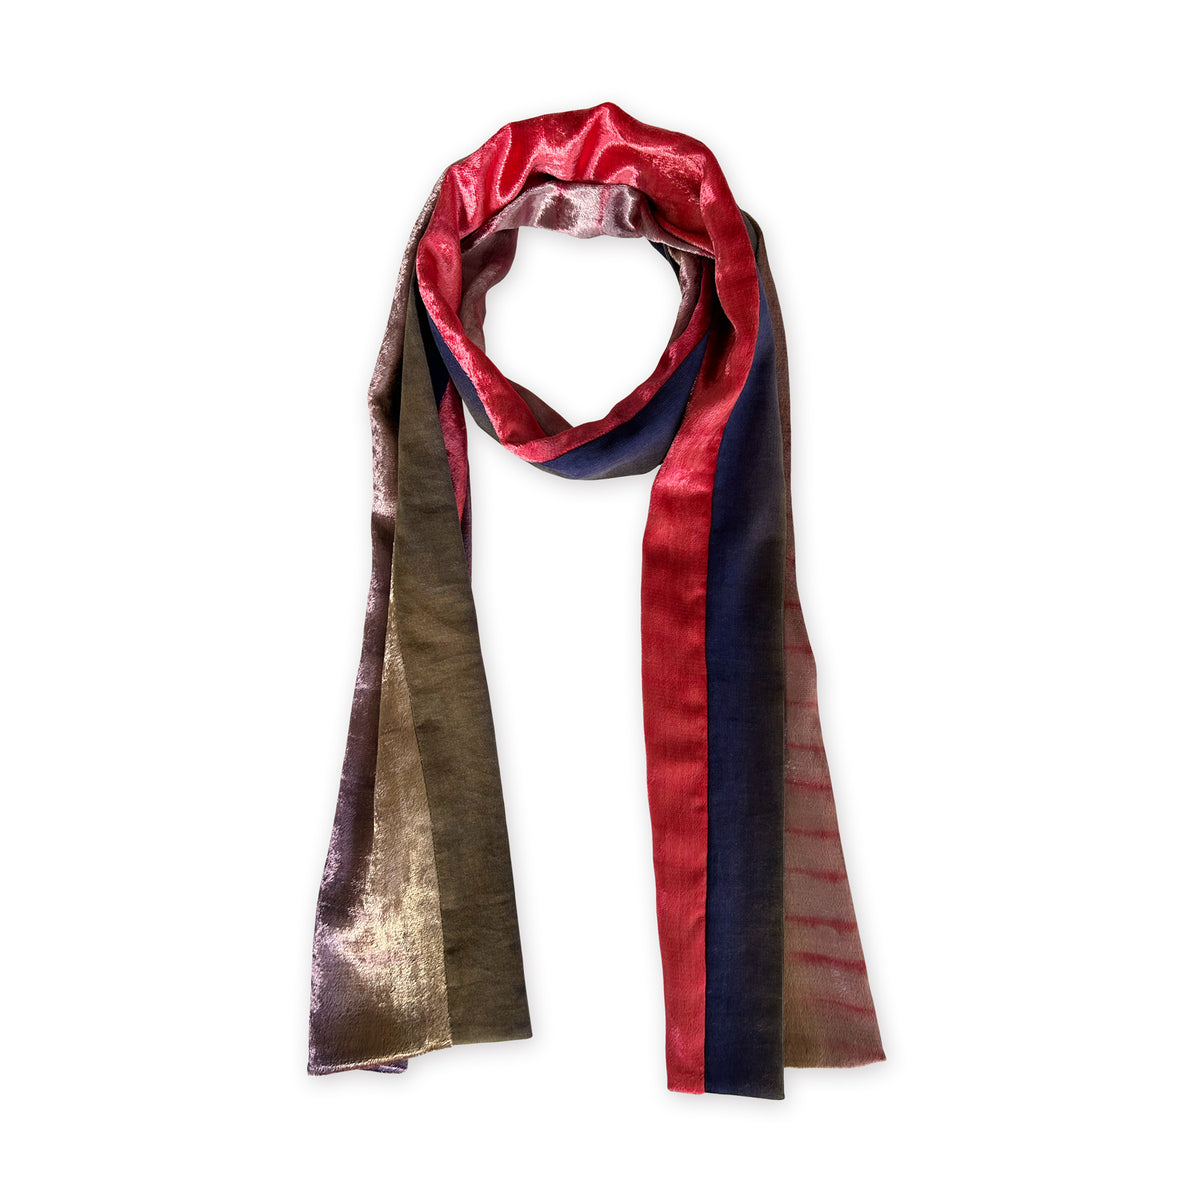 velvet-scarf-hand-painted-183x19cm-red-violet-brown-blue-otta-italy-2347